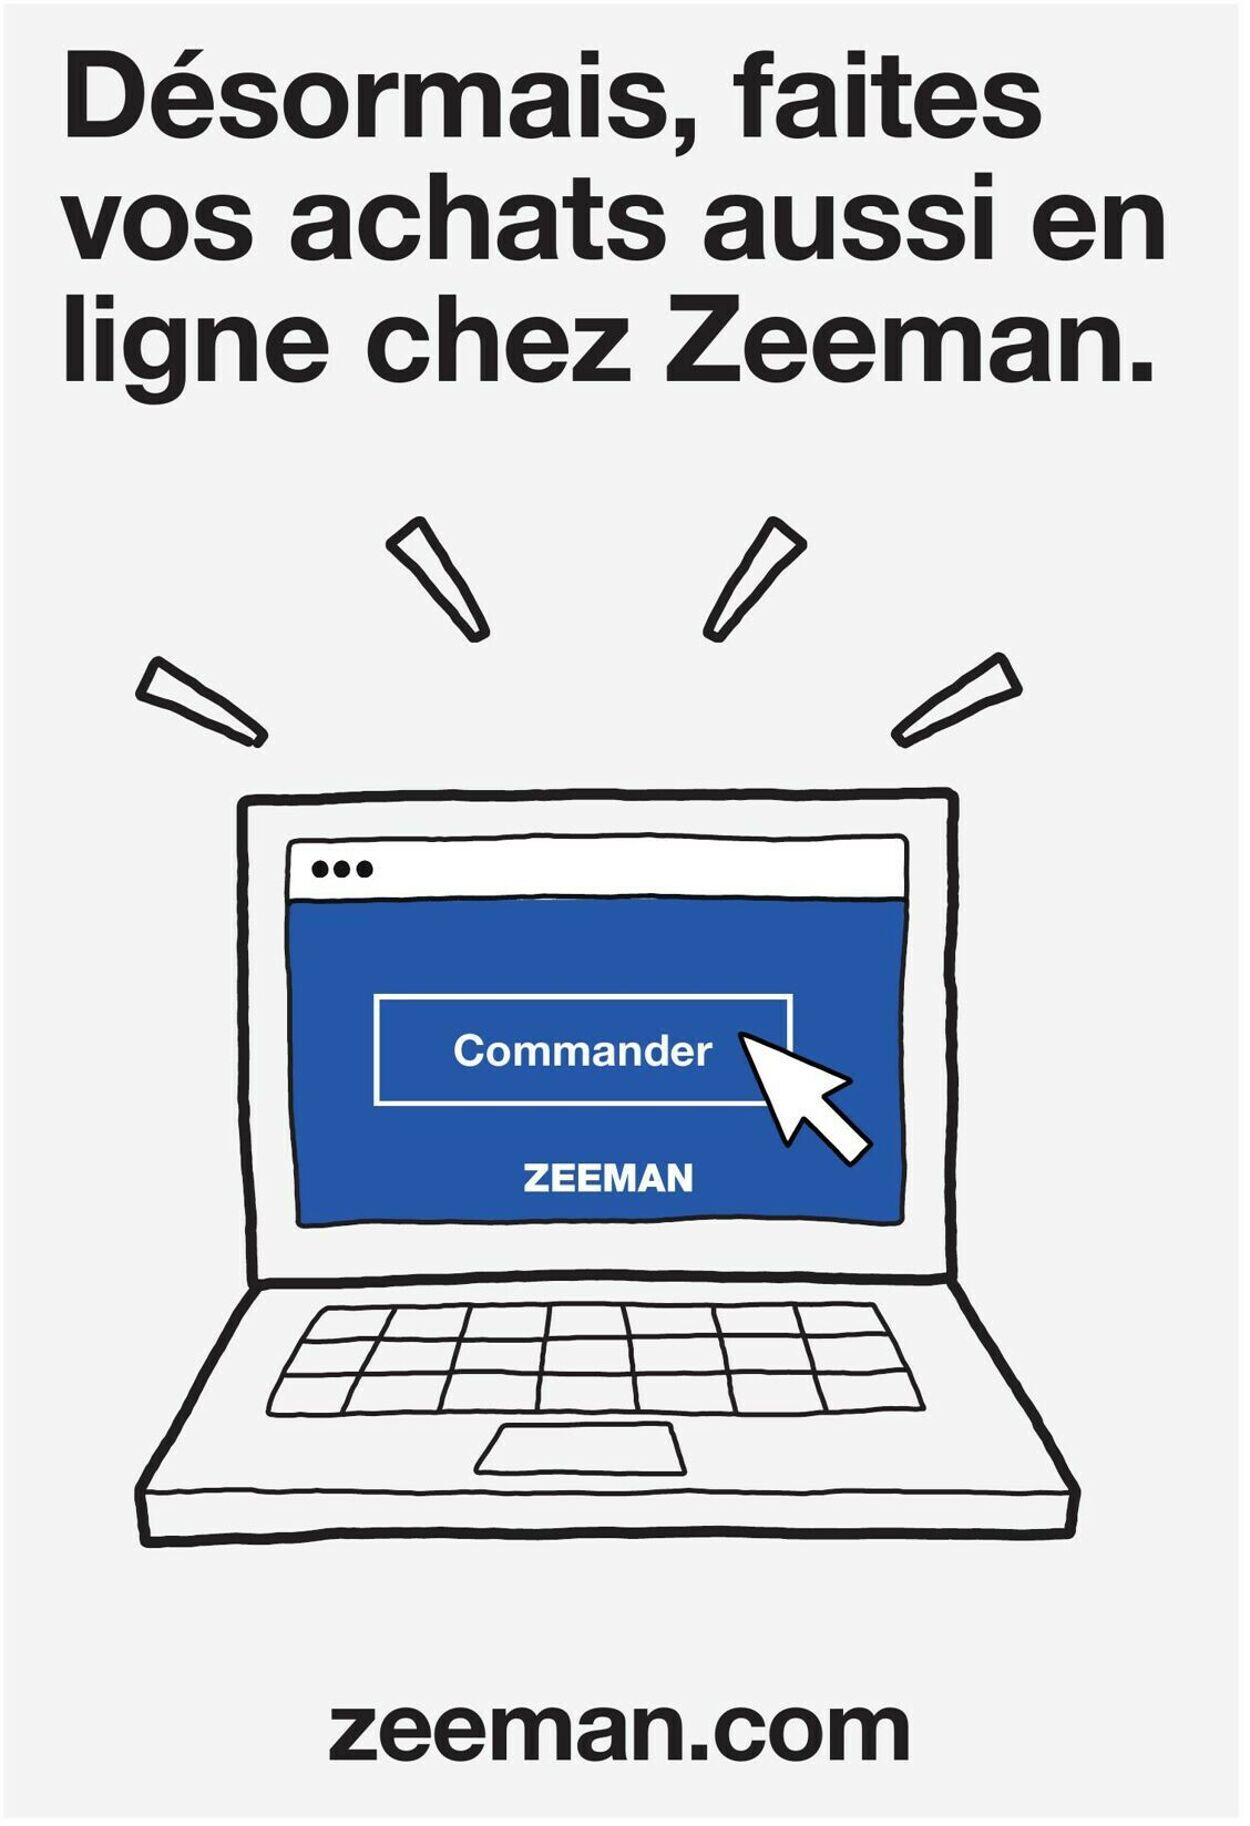 Zeeman Catalogue du 18.03.2023